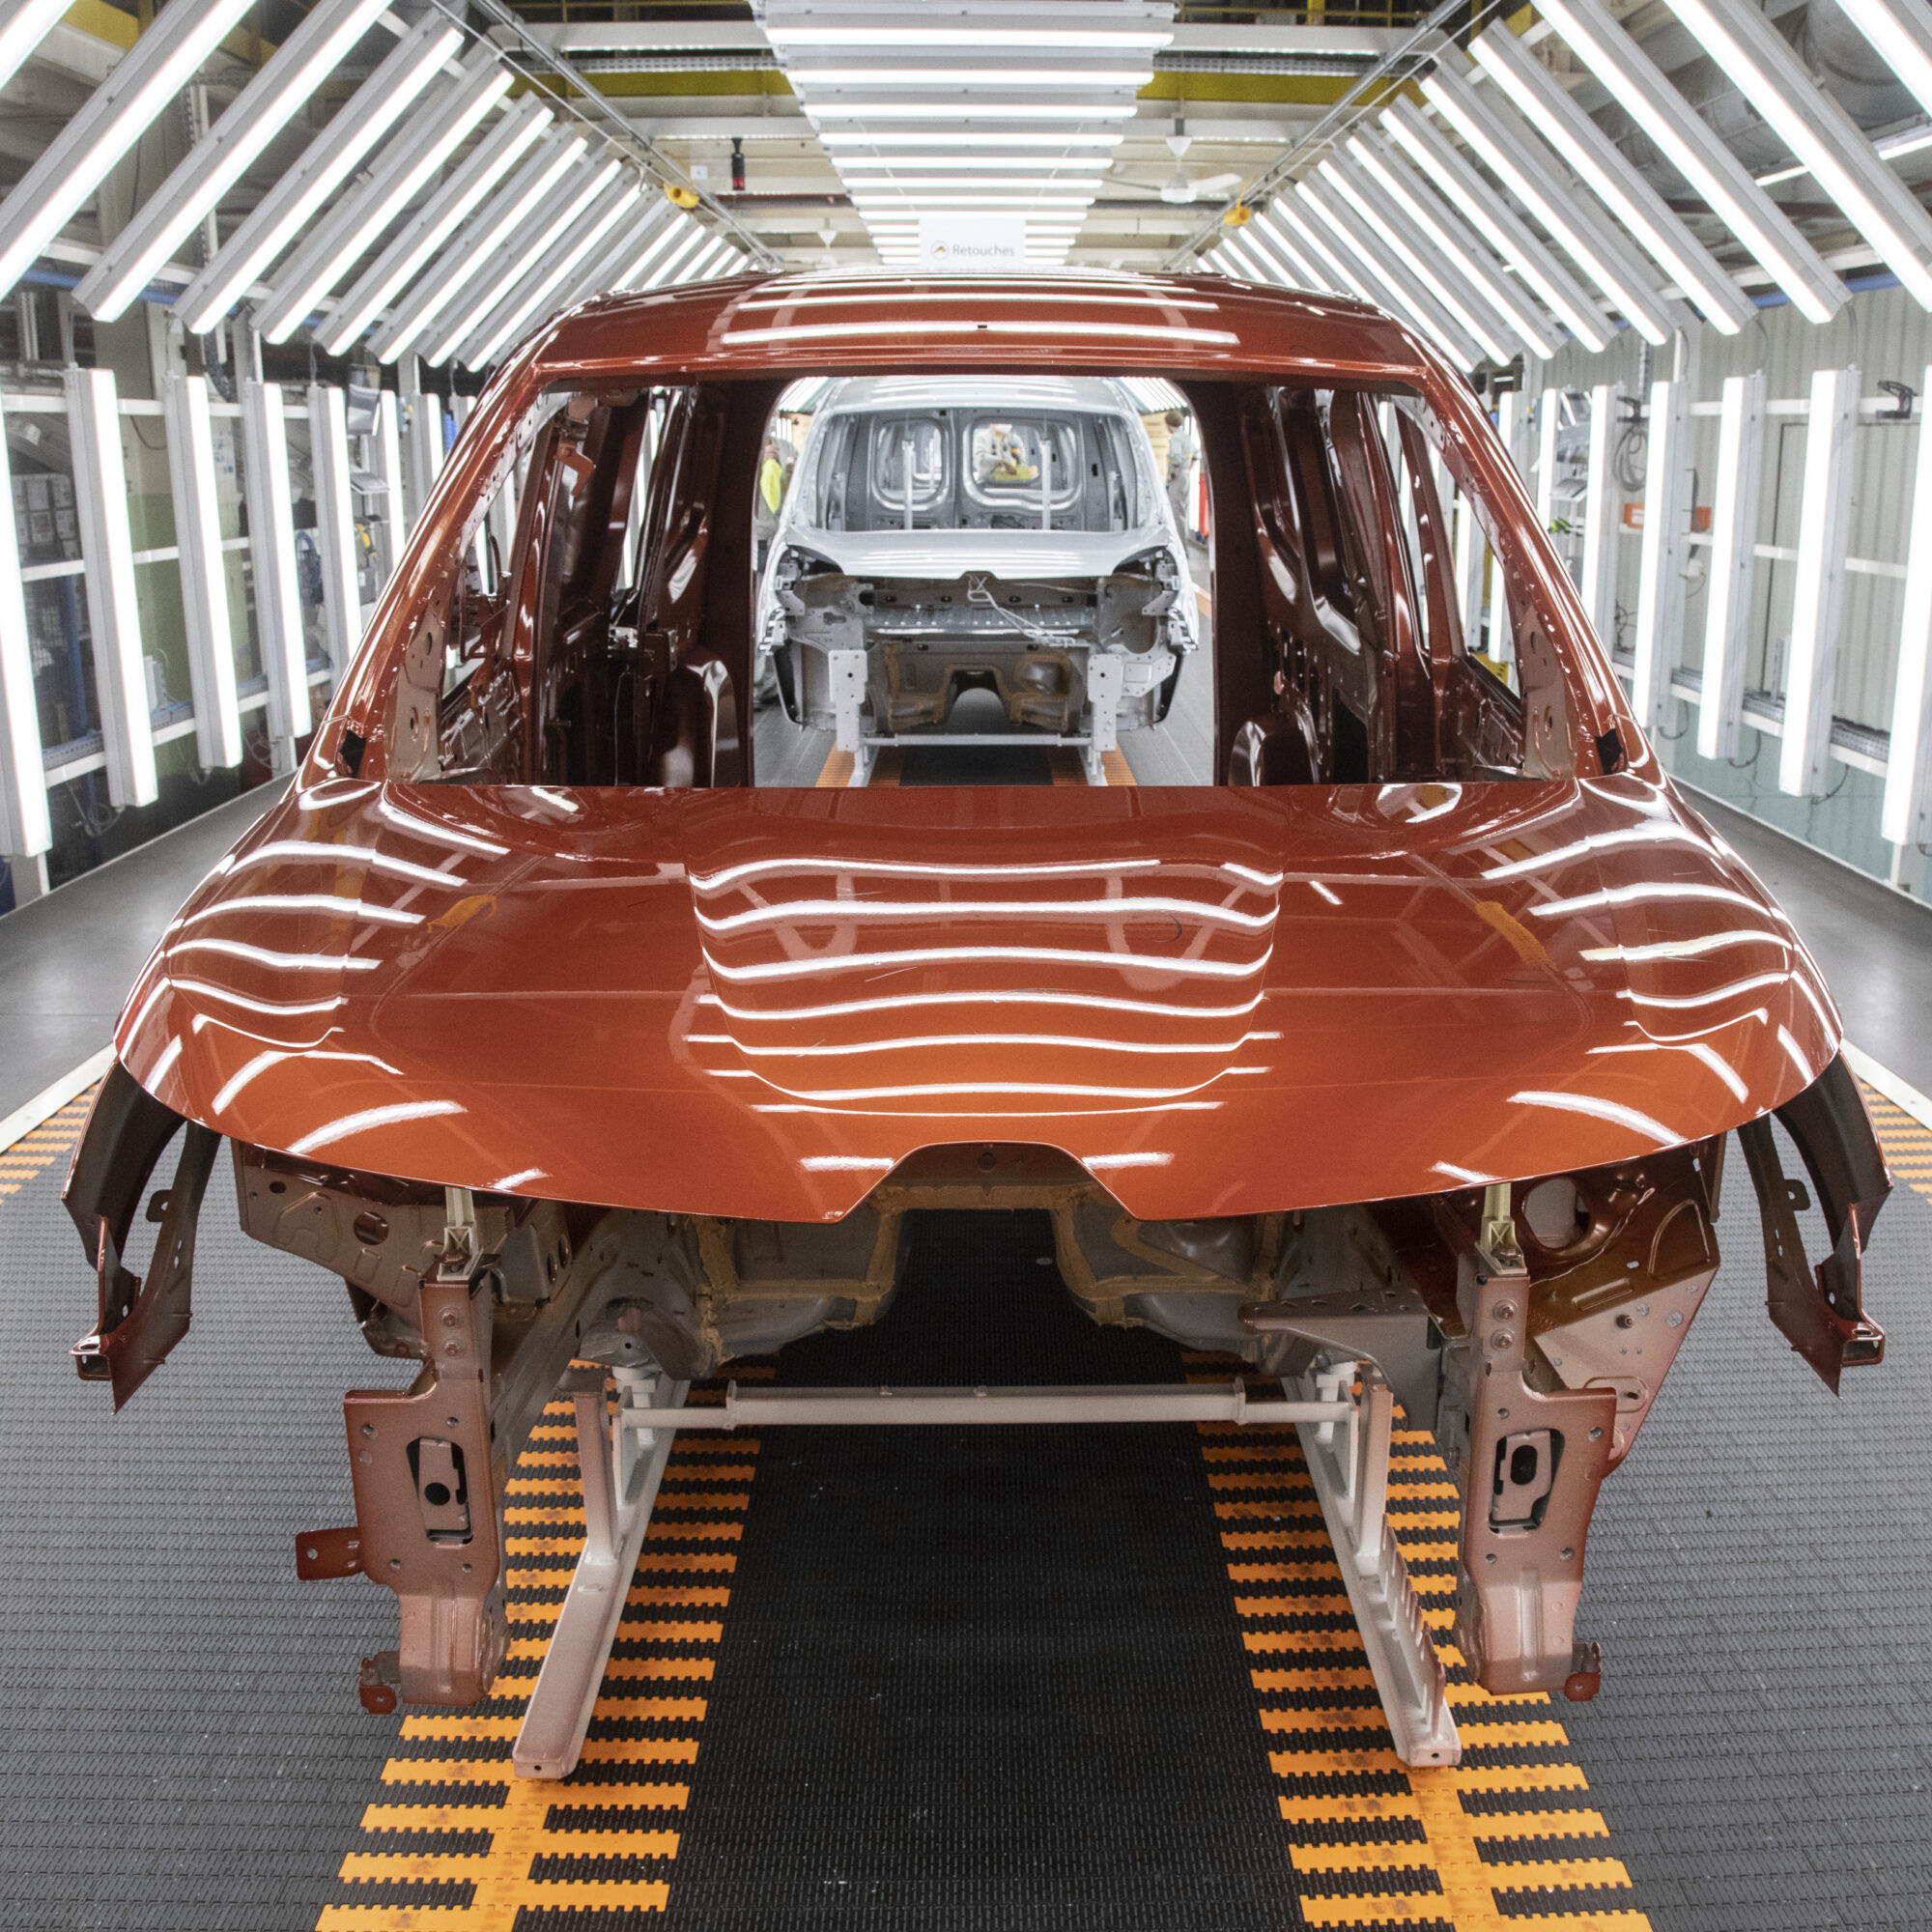 2021 - Nouveau Renault Kangoo - Industrialisation